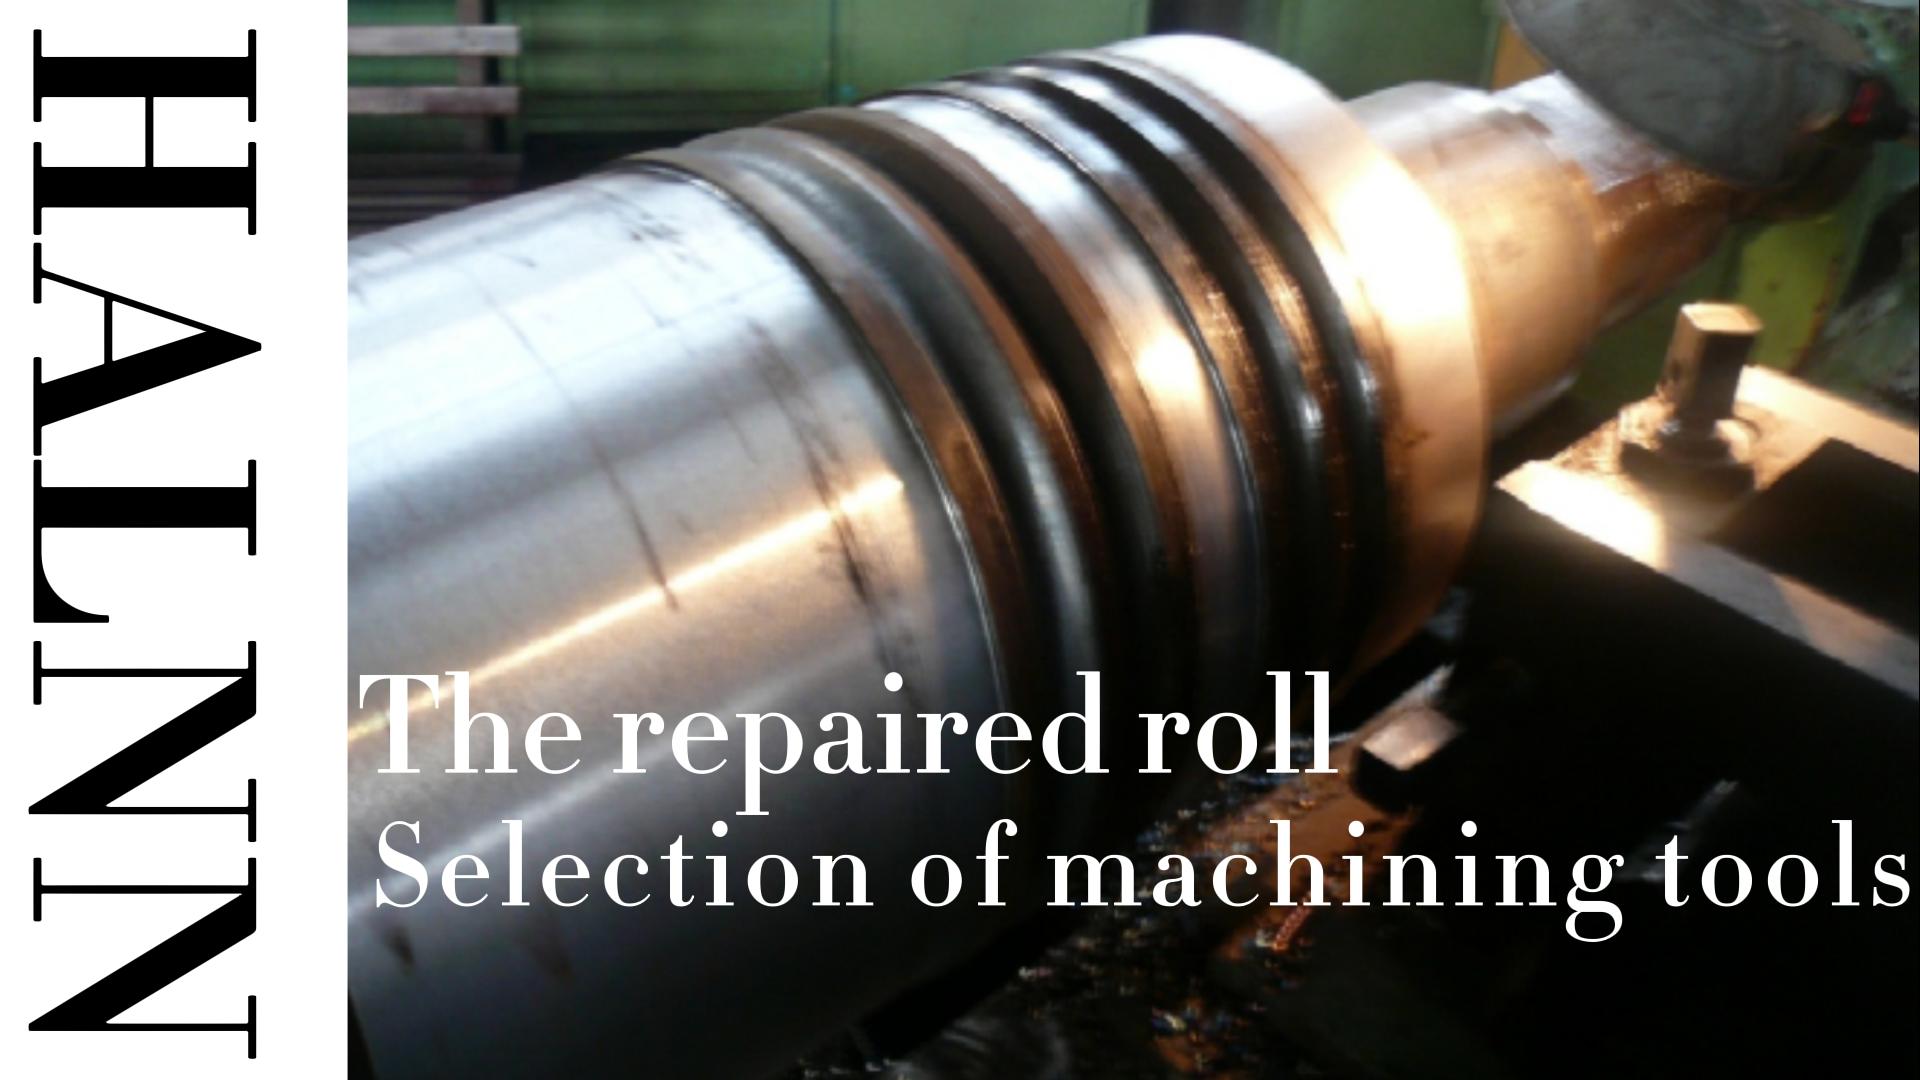 Repair roll machining tool selection (CBN/PCD)